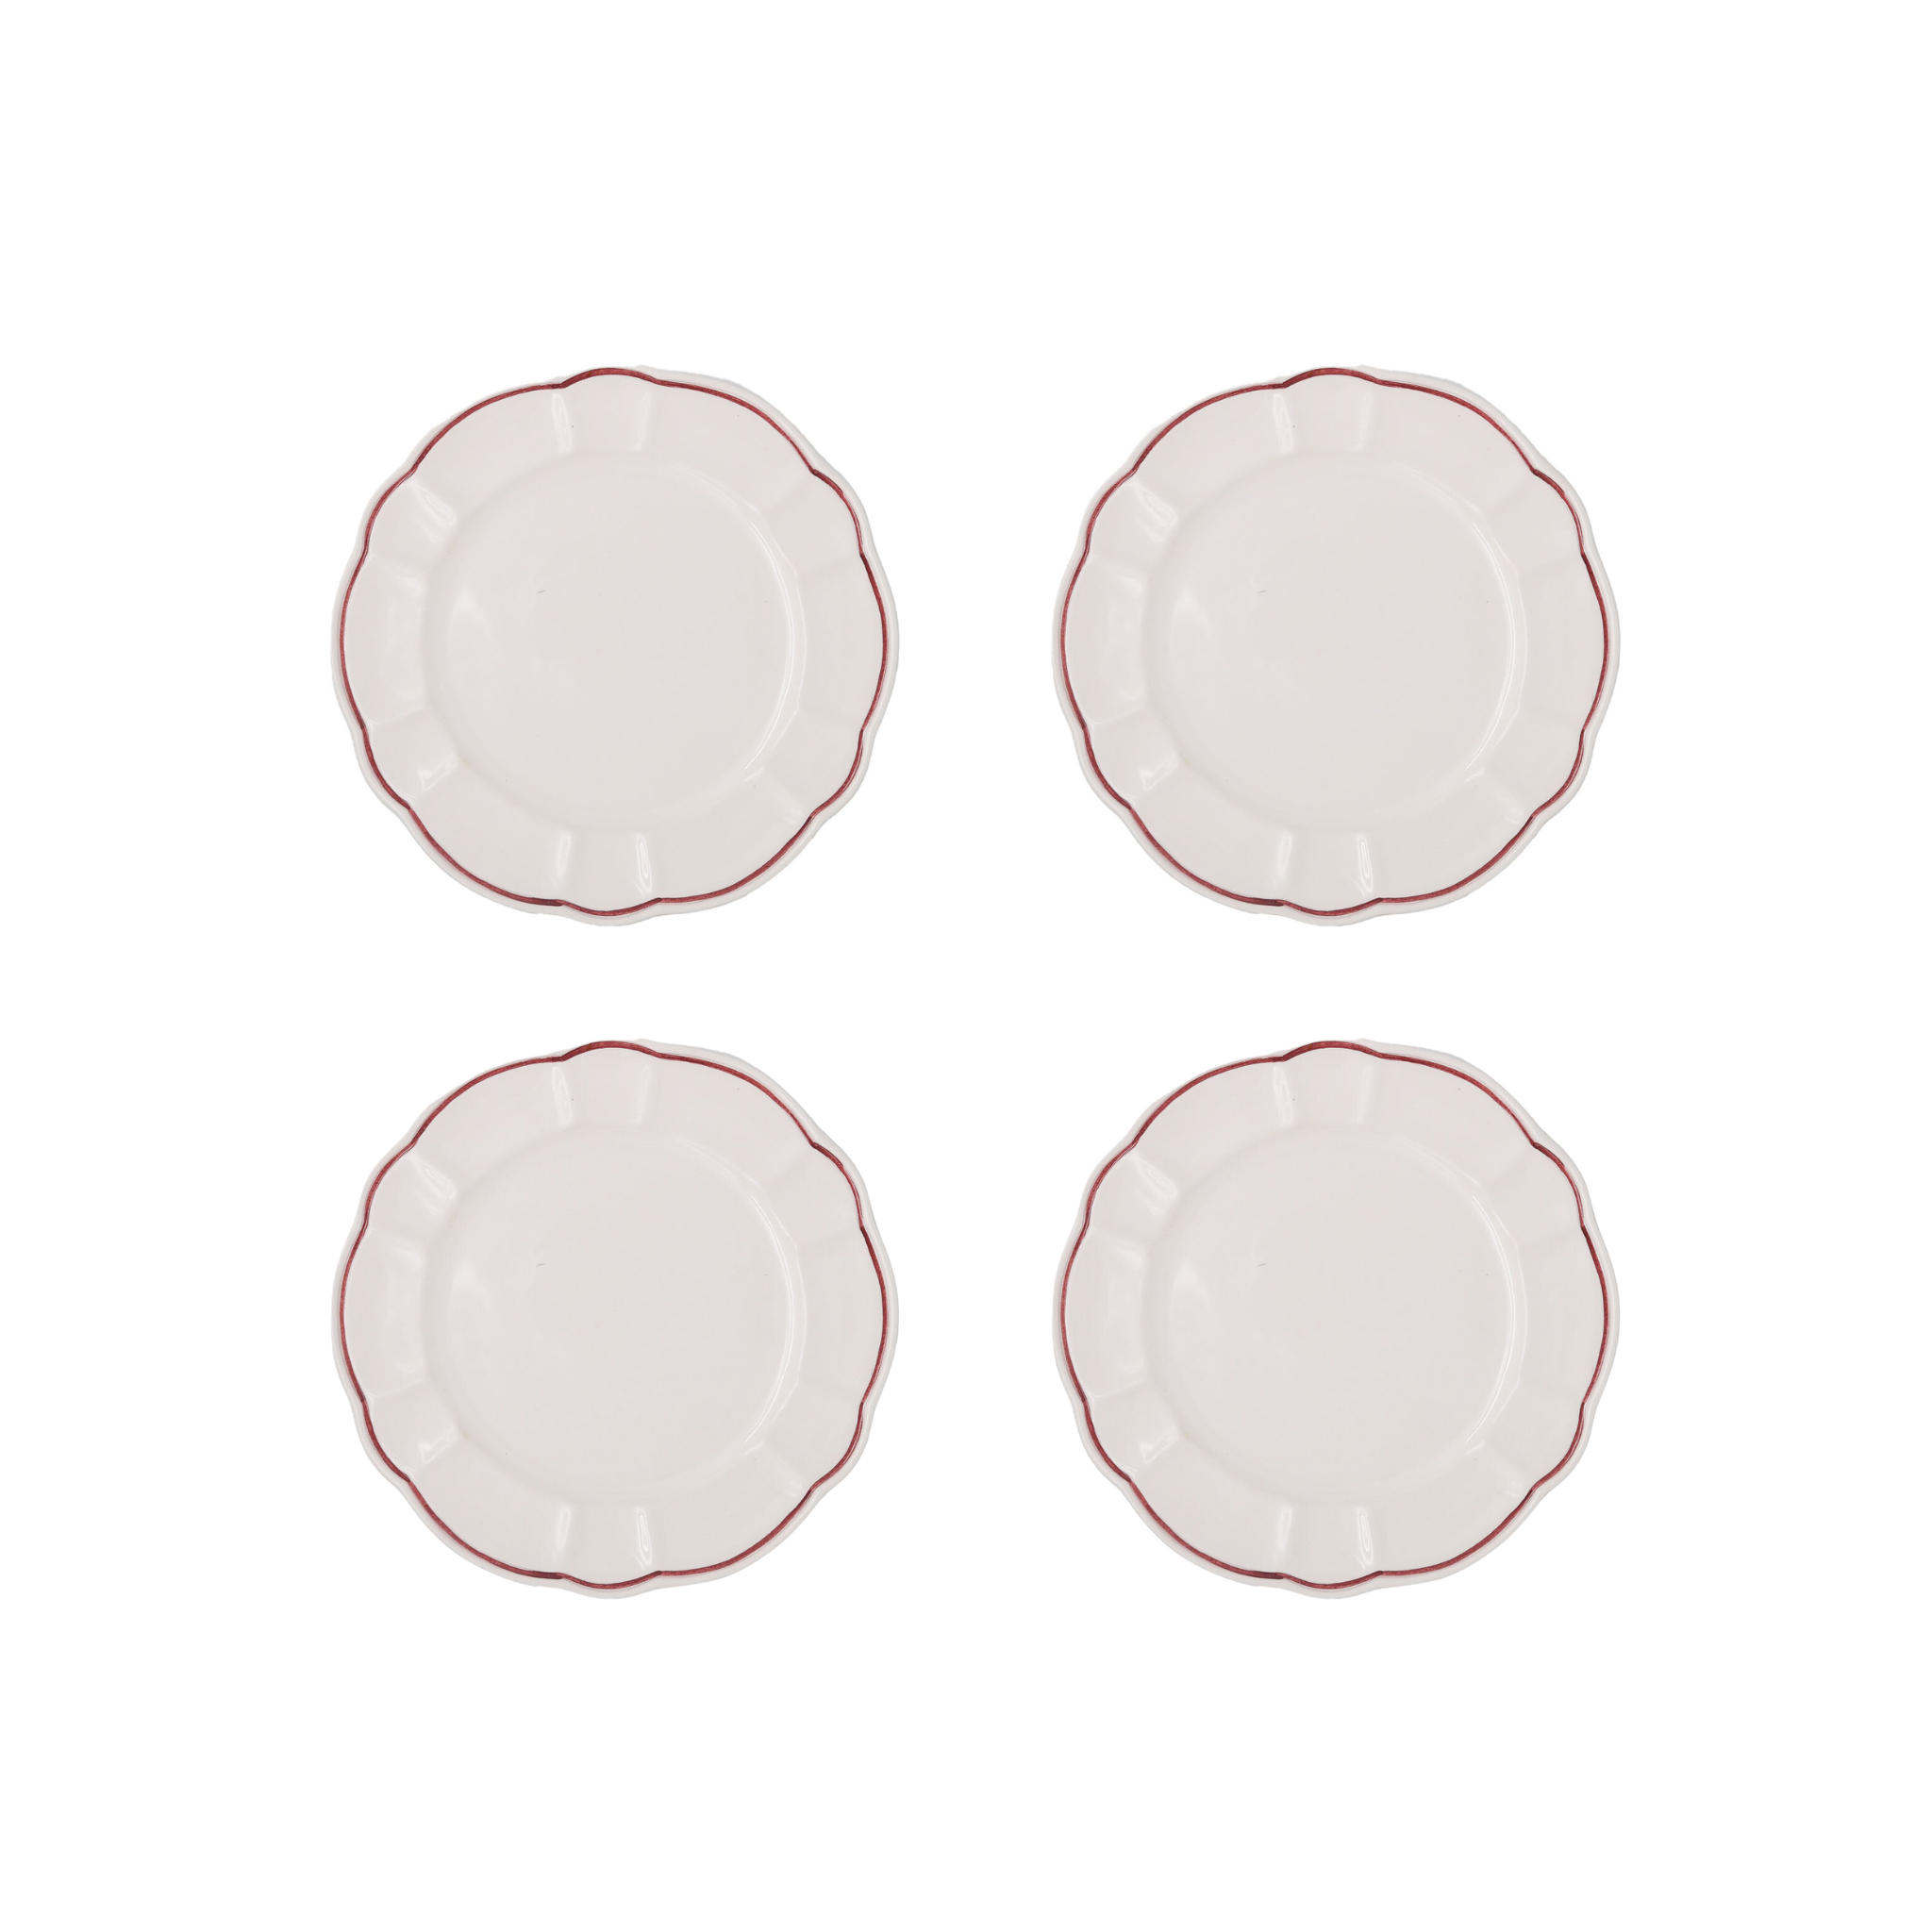 Romilly Side Plate, Red, Set of 4 - Skye McAlpine Tavola